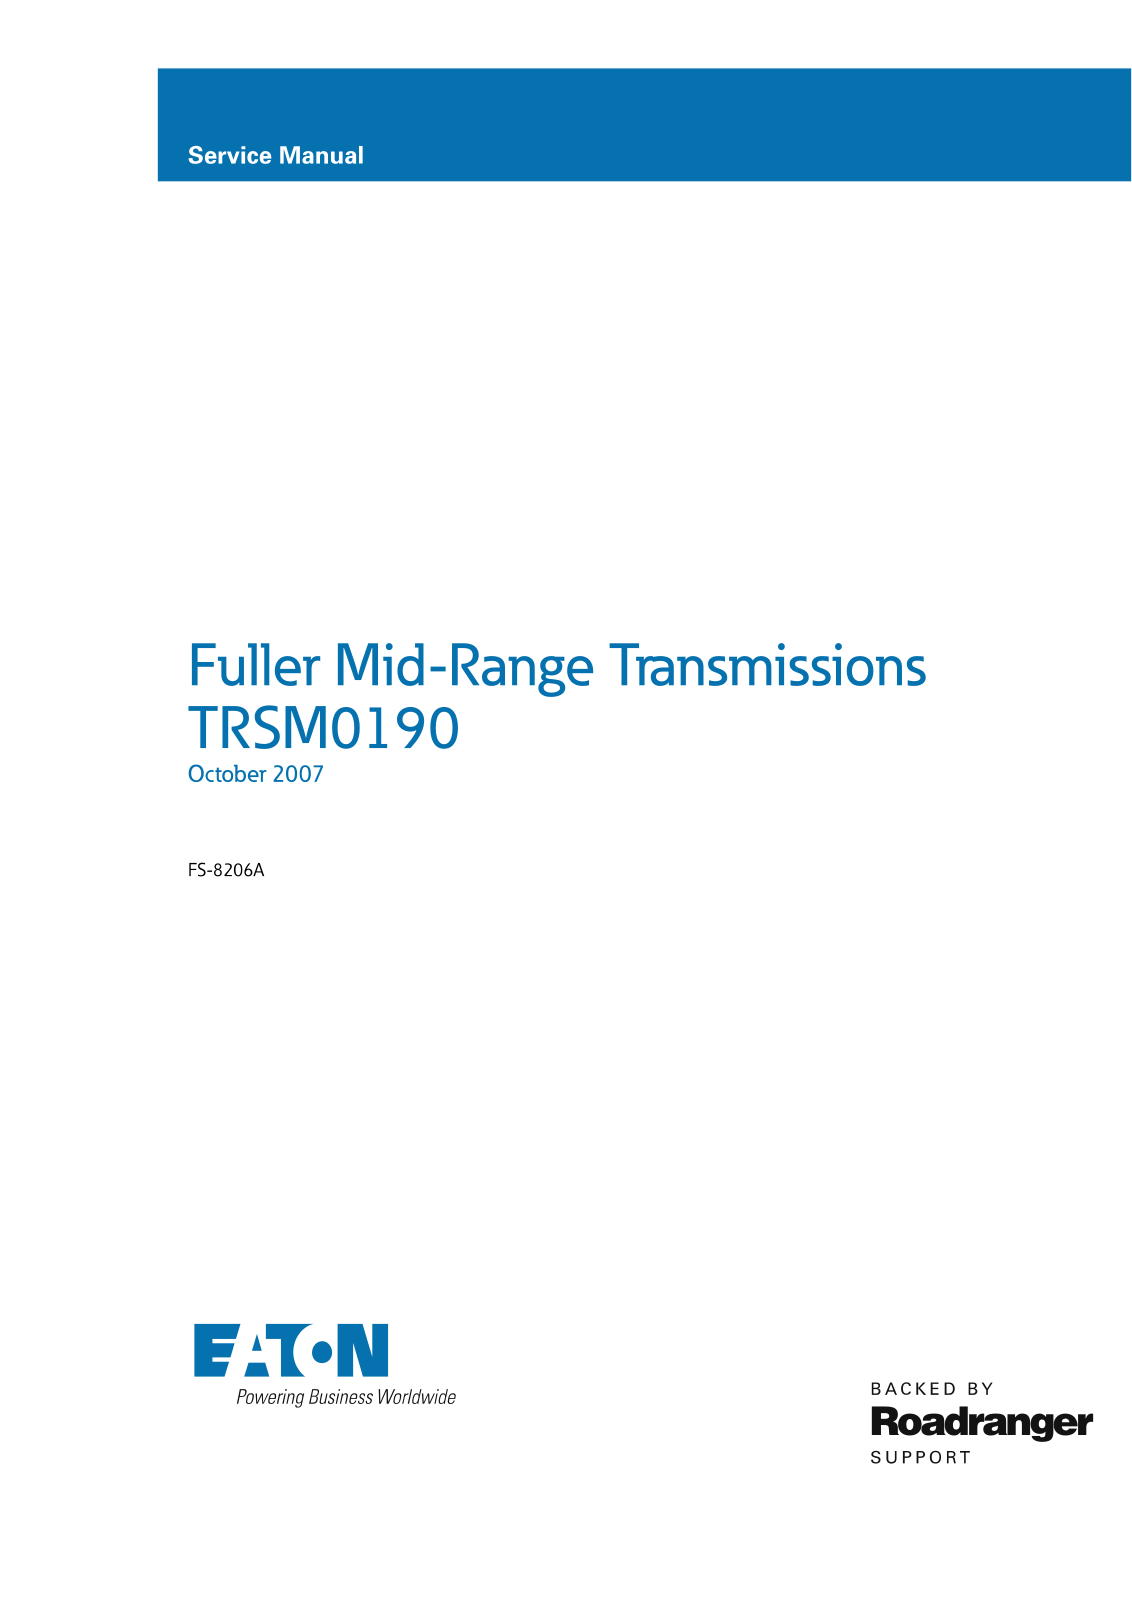 Eaton Transmission FS-8206A Service Manual